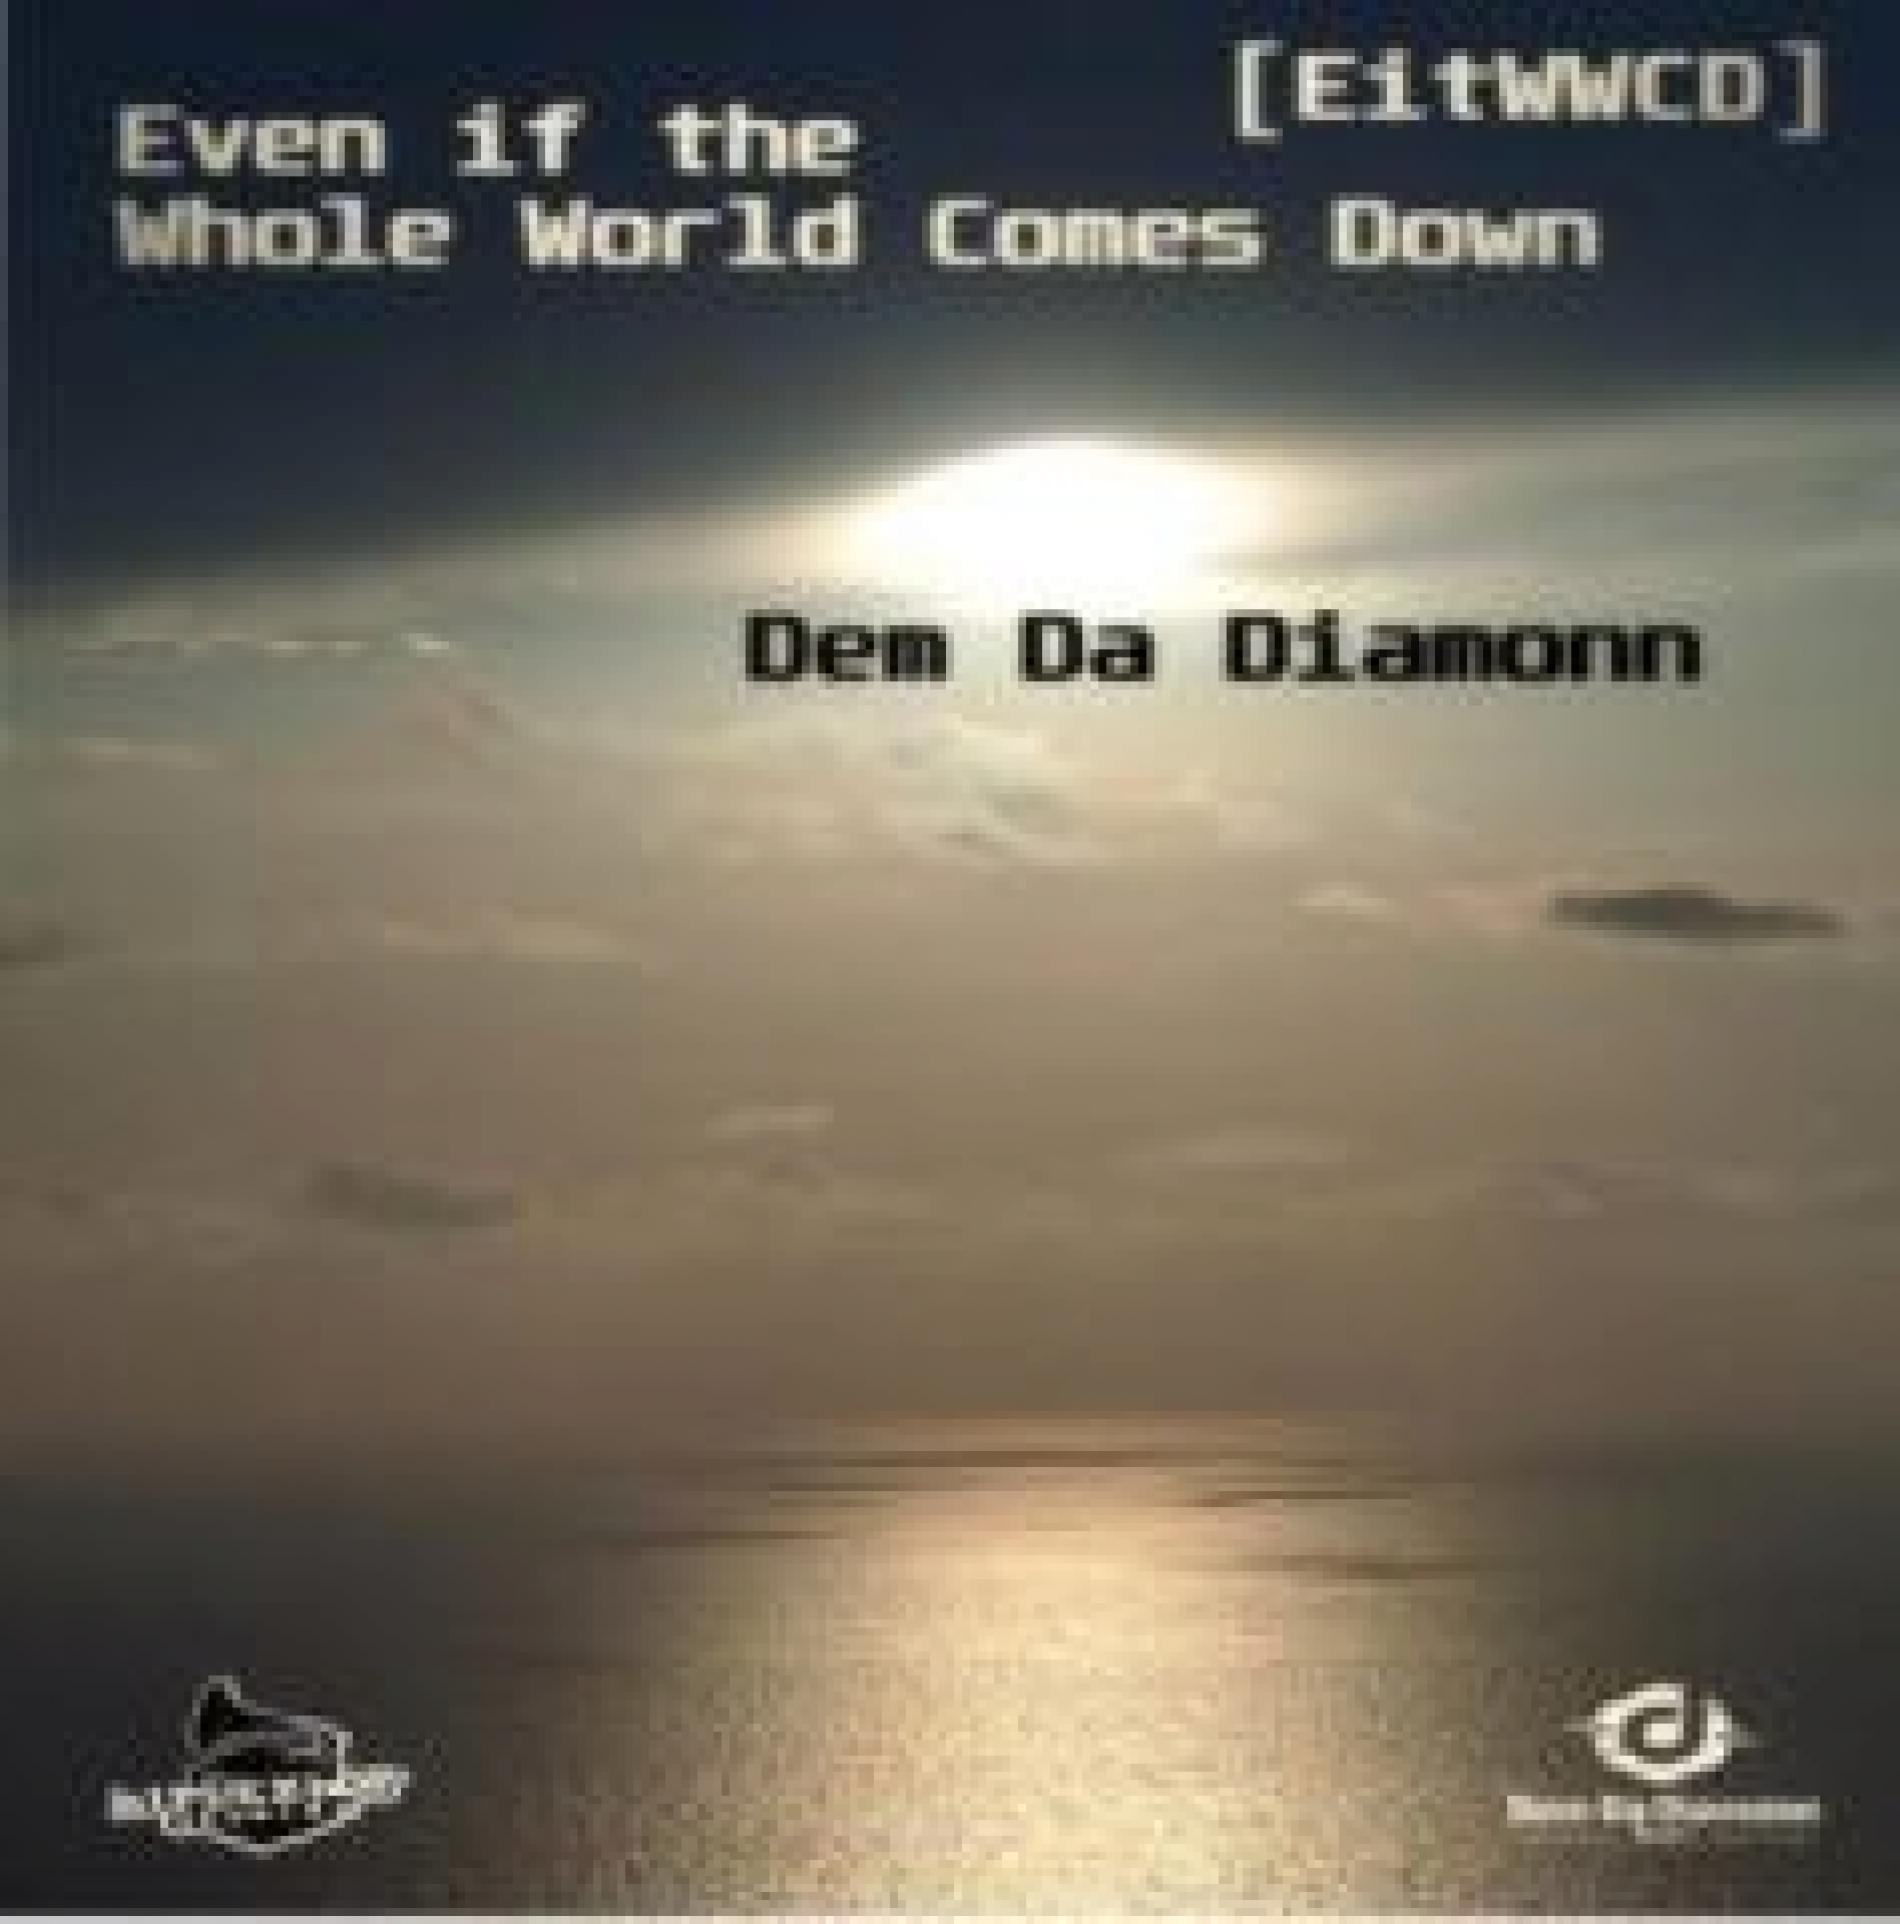 New Music : Dem Da Diamonn – Even If The Whole World Comes Down